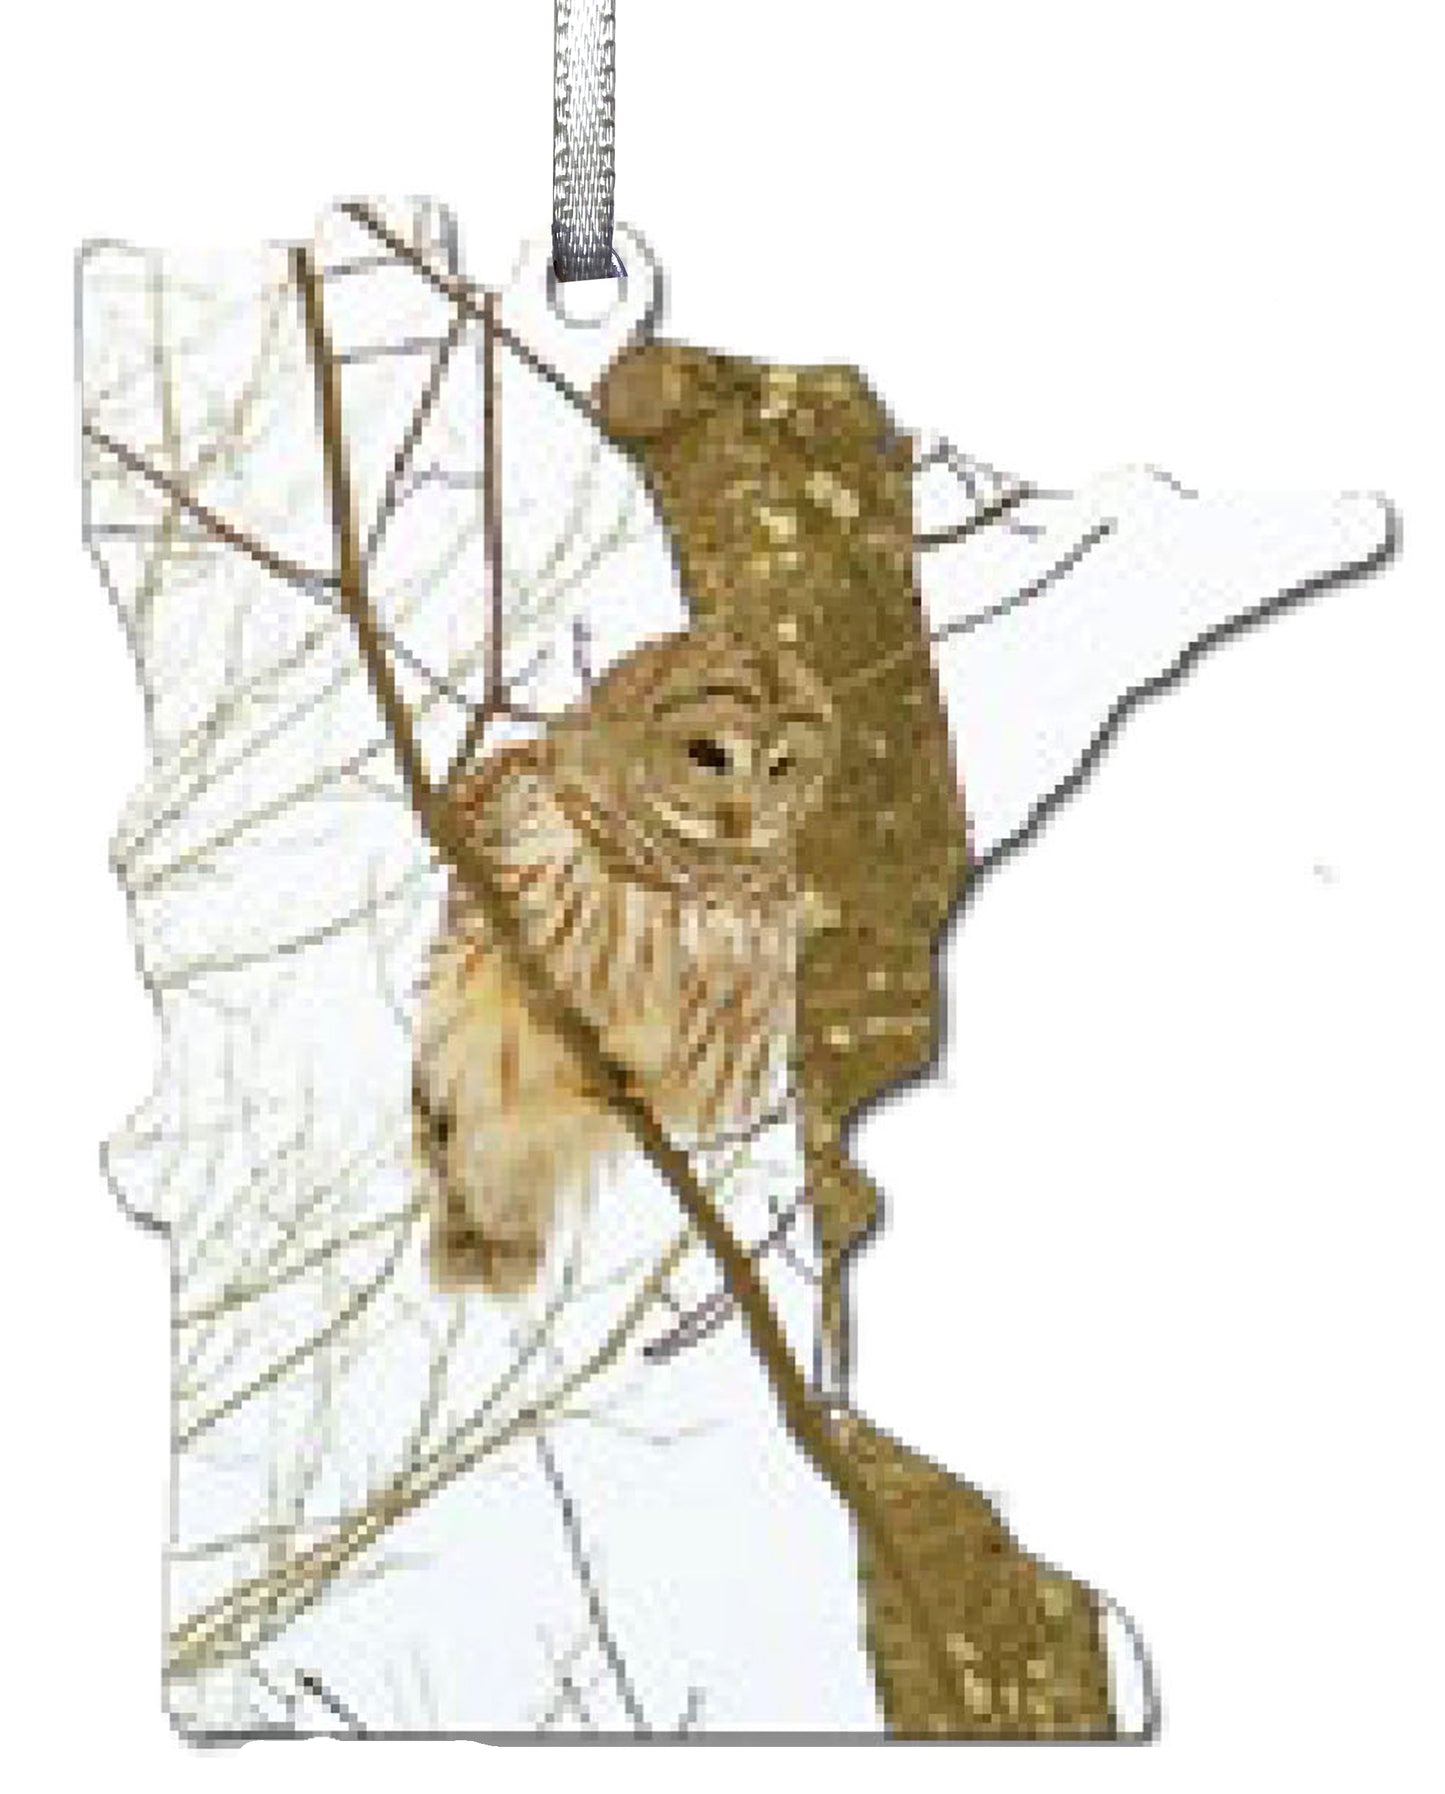 MN, Barred Owl, Ornament 2.5 inch, #8029